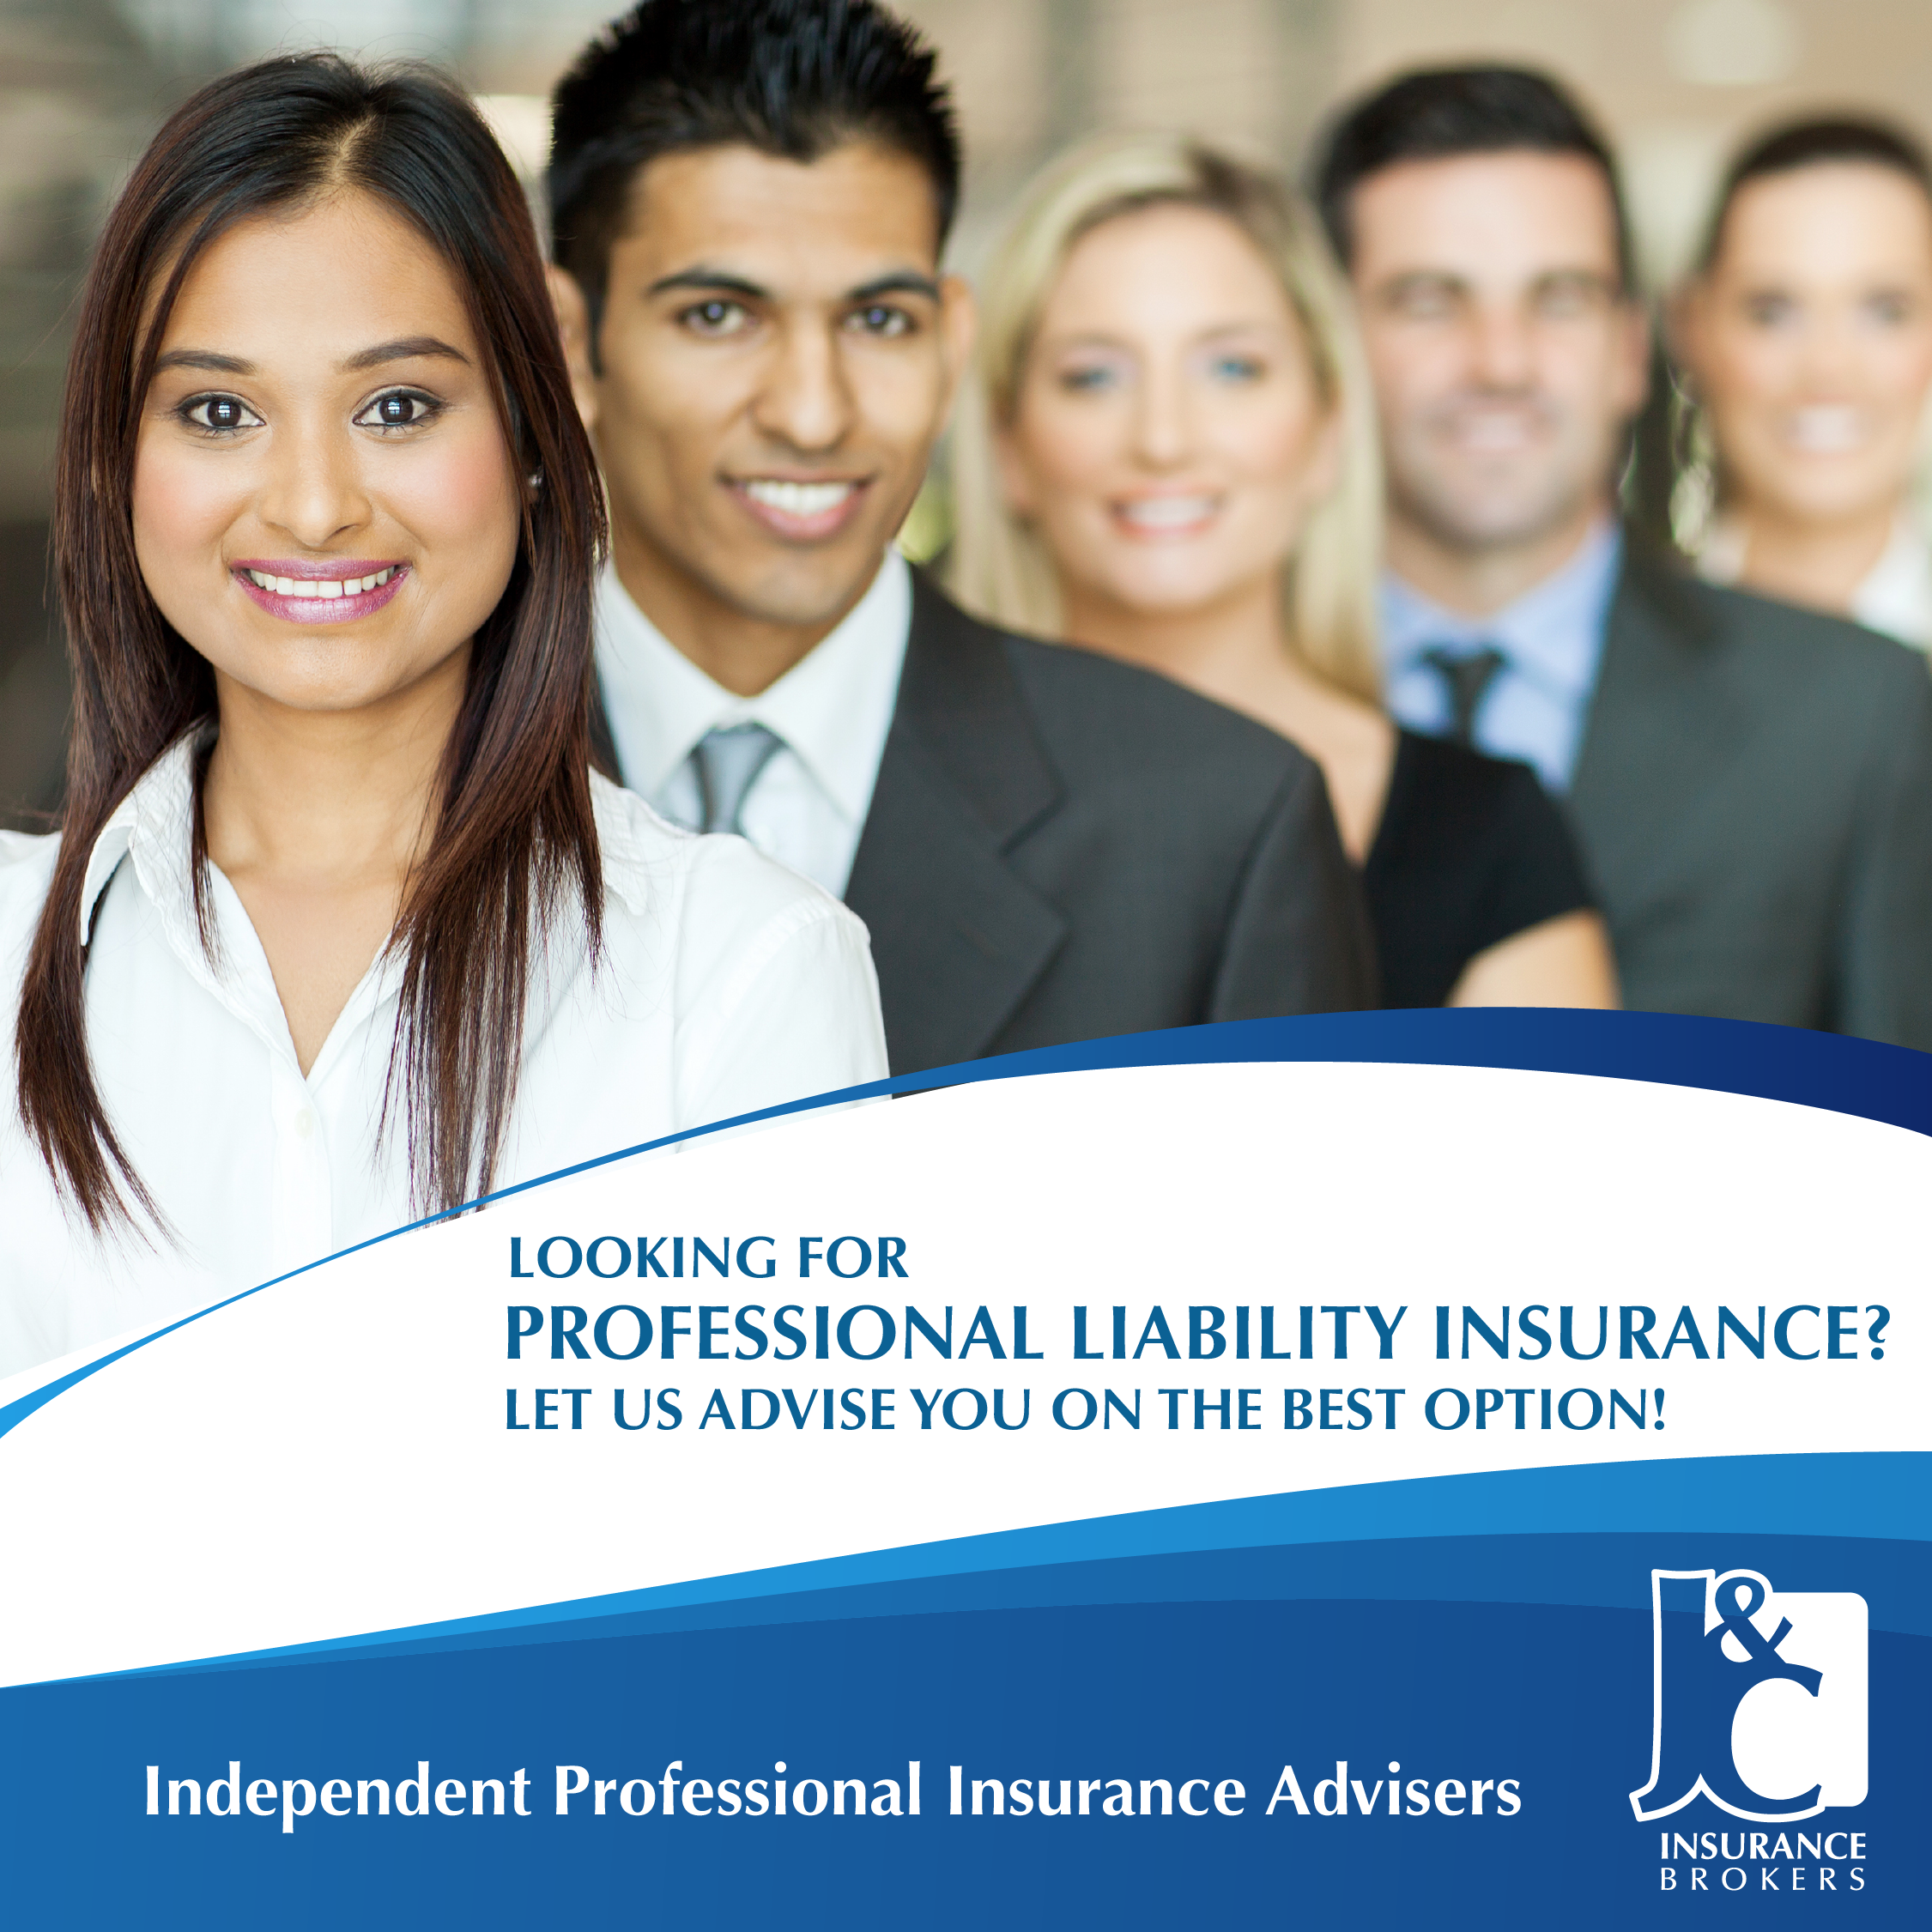 J&C Insurance Brokers - Professional Liability Insurance